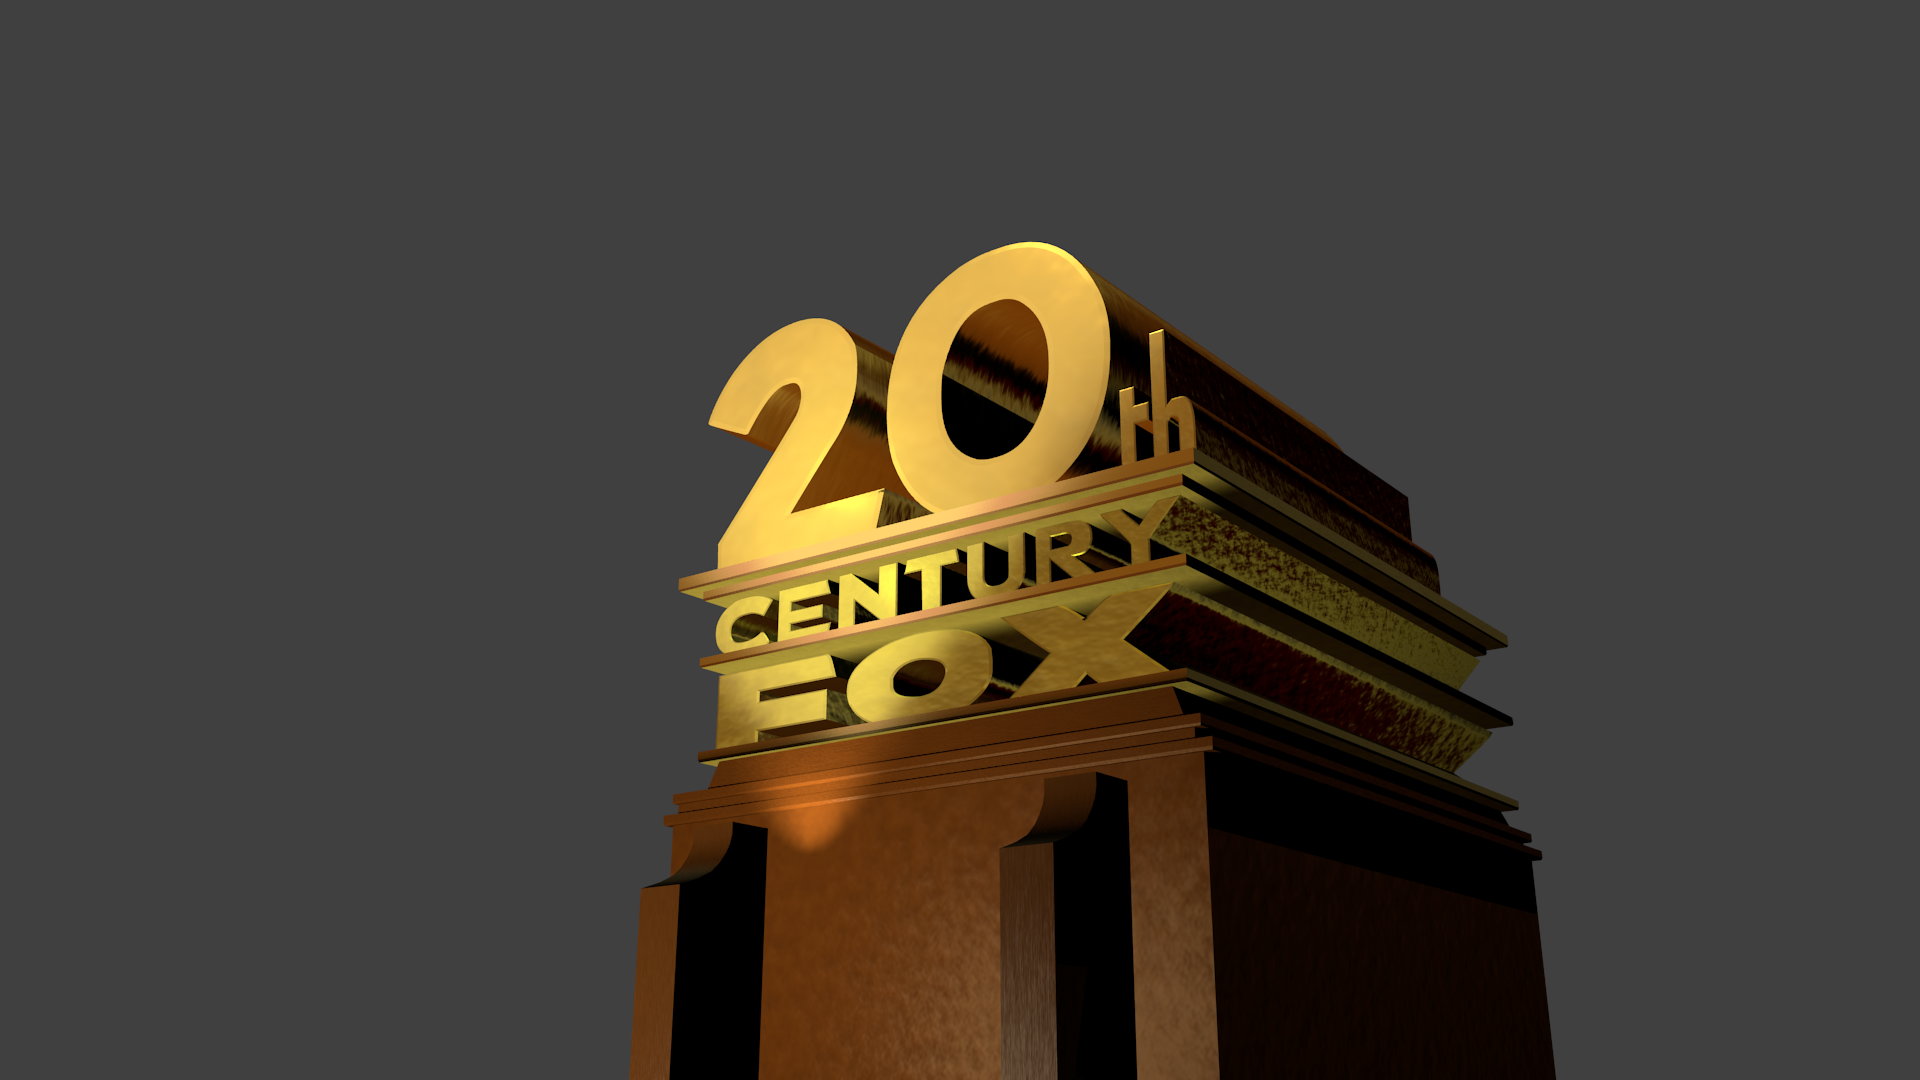 Th fox. 20 Век Центури Фокс. Киностудия 20 век Фокс. 20th Century Fox создатель. 20th Century Fox logo.